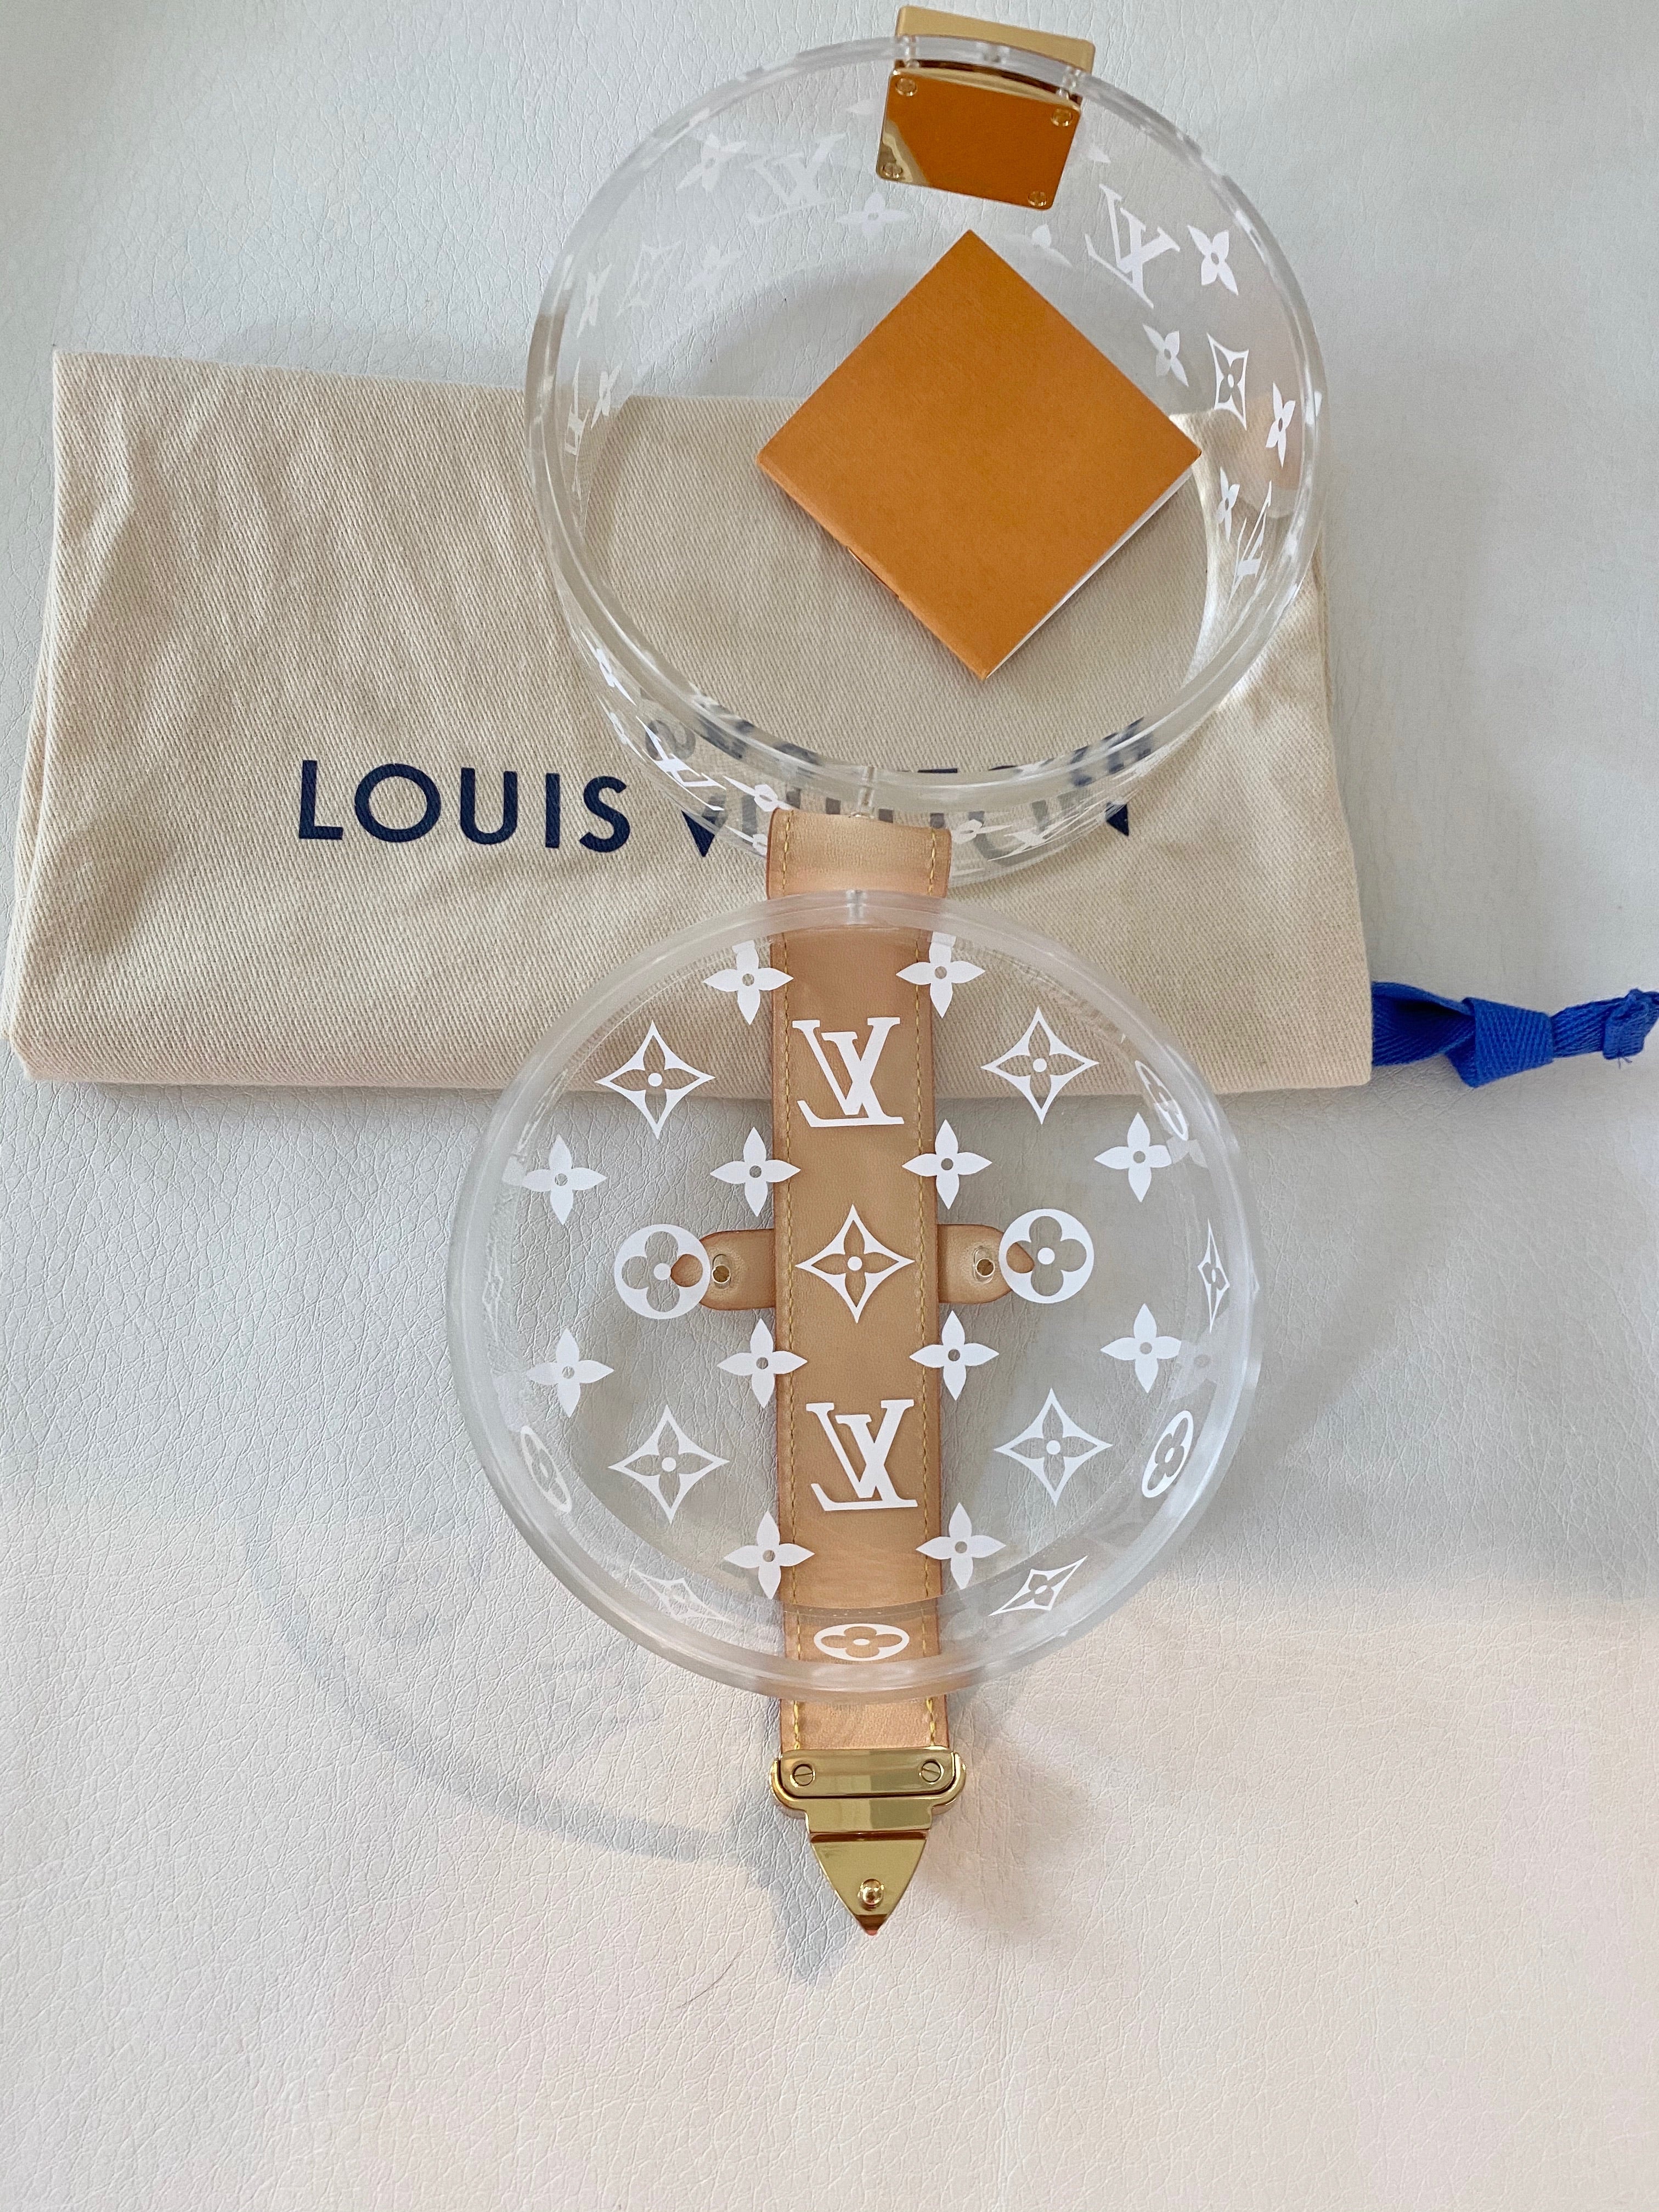 Louis Vuitton Box -  Canada